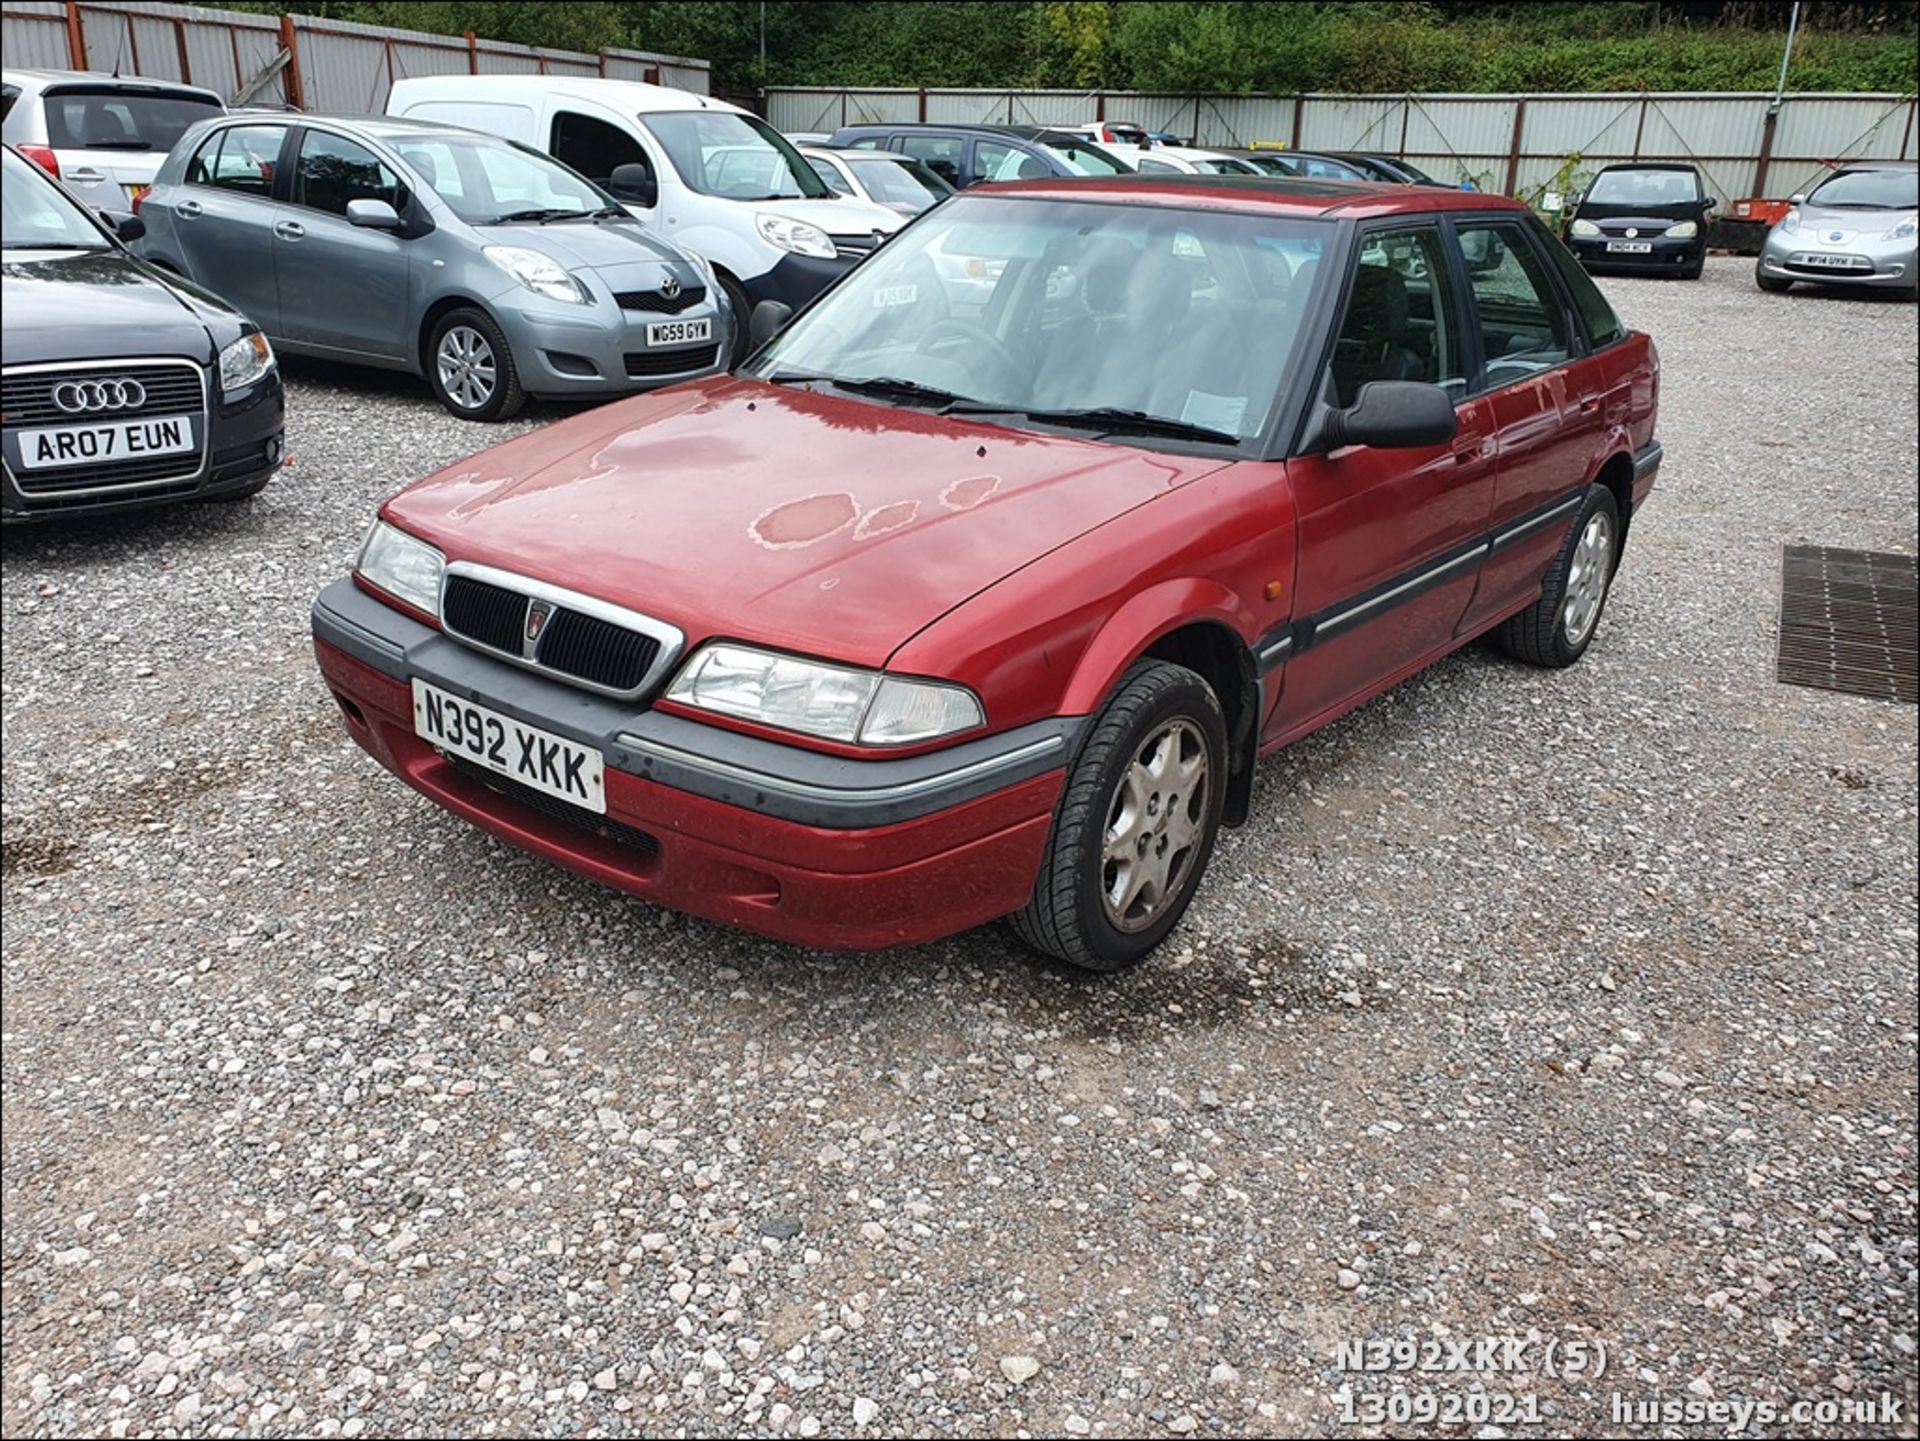 1995 ROVER 214 SEI - 1396cc 5dr Hatchback (Red, 99k) - Image 5 of 15